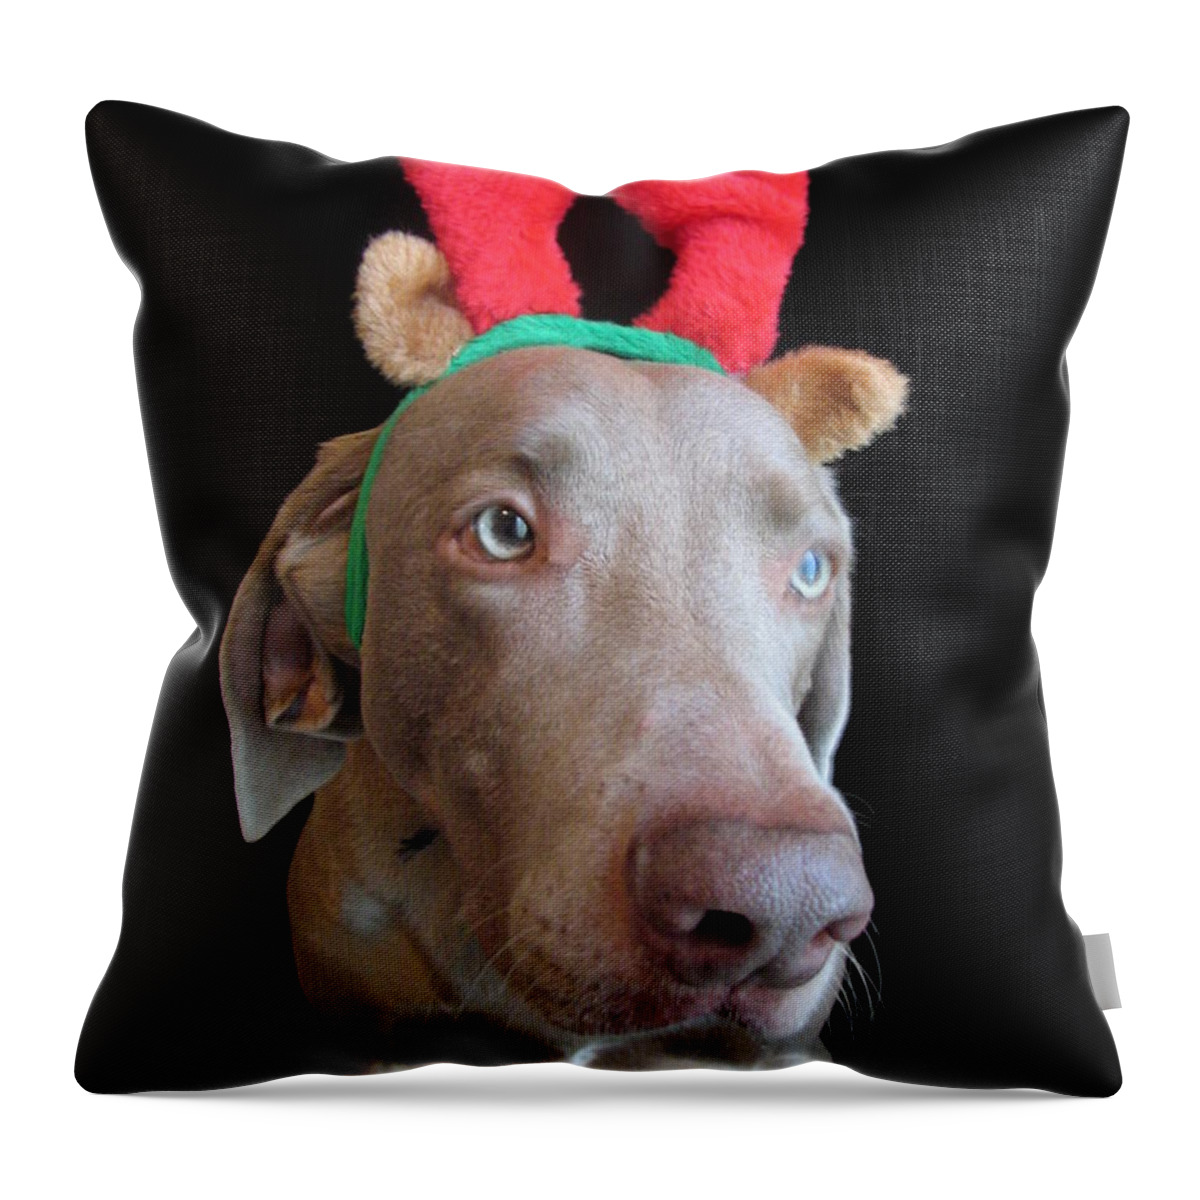 Reindeer Throw Pillow featuring the photograph Reindeer Doggie by Art Dingo